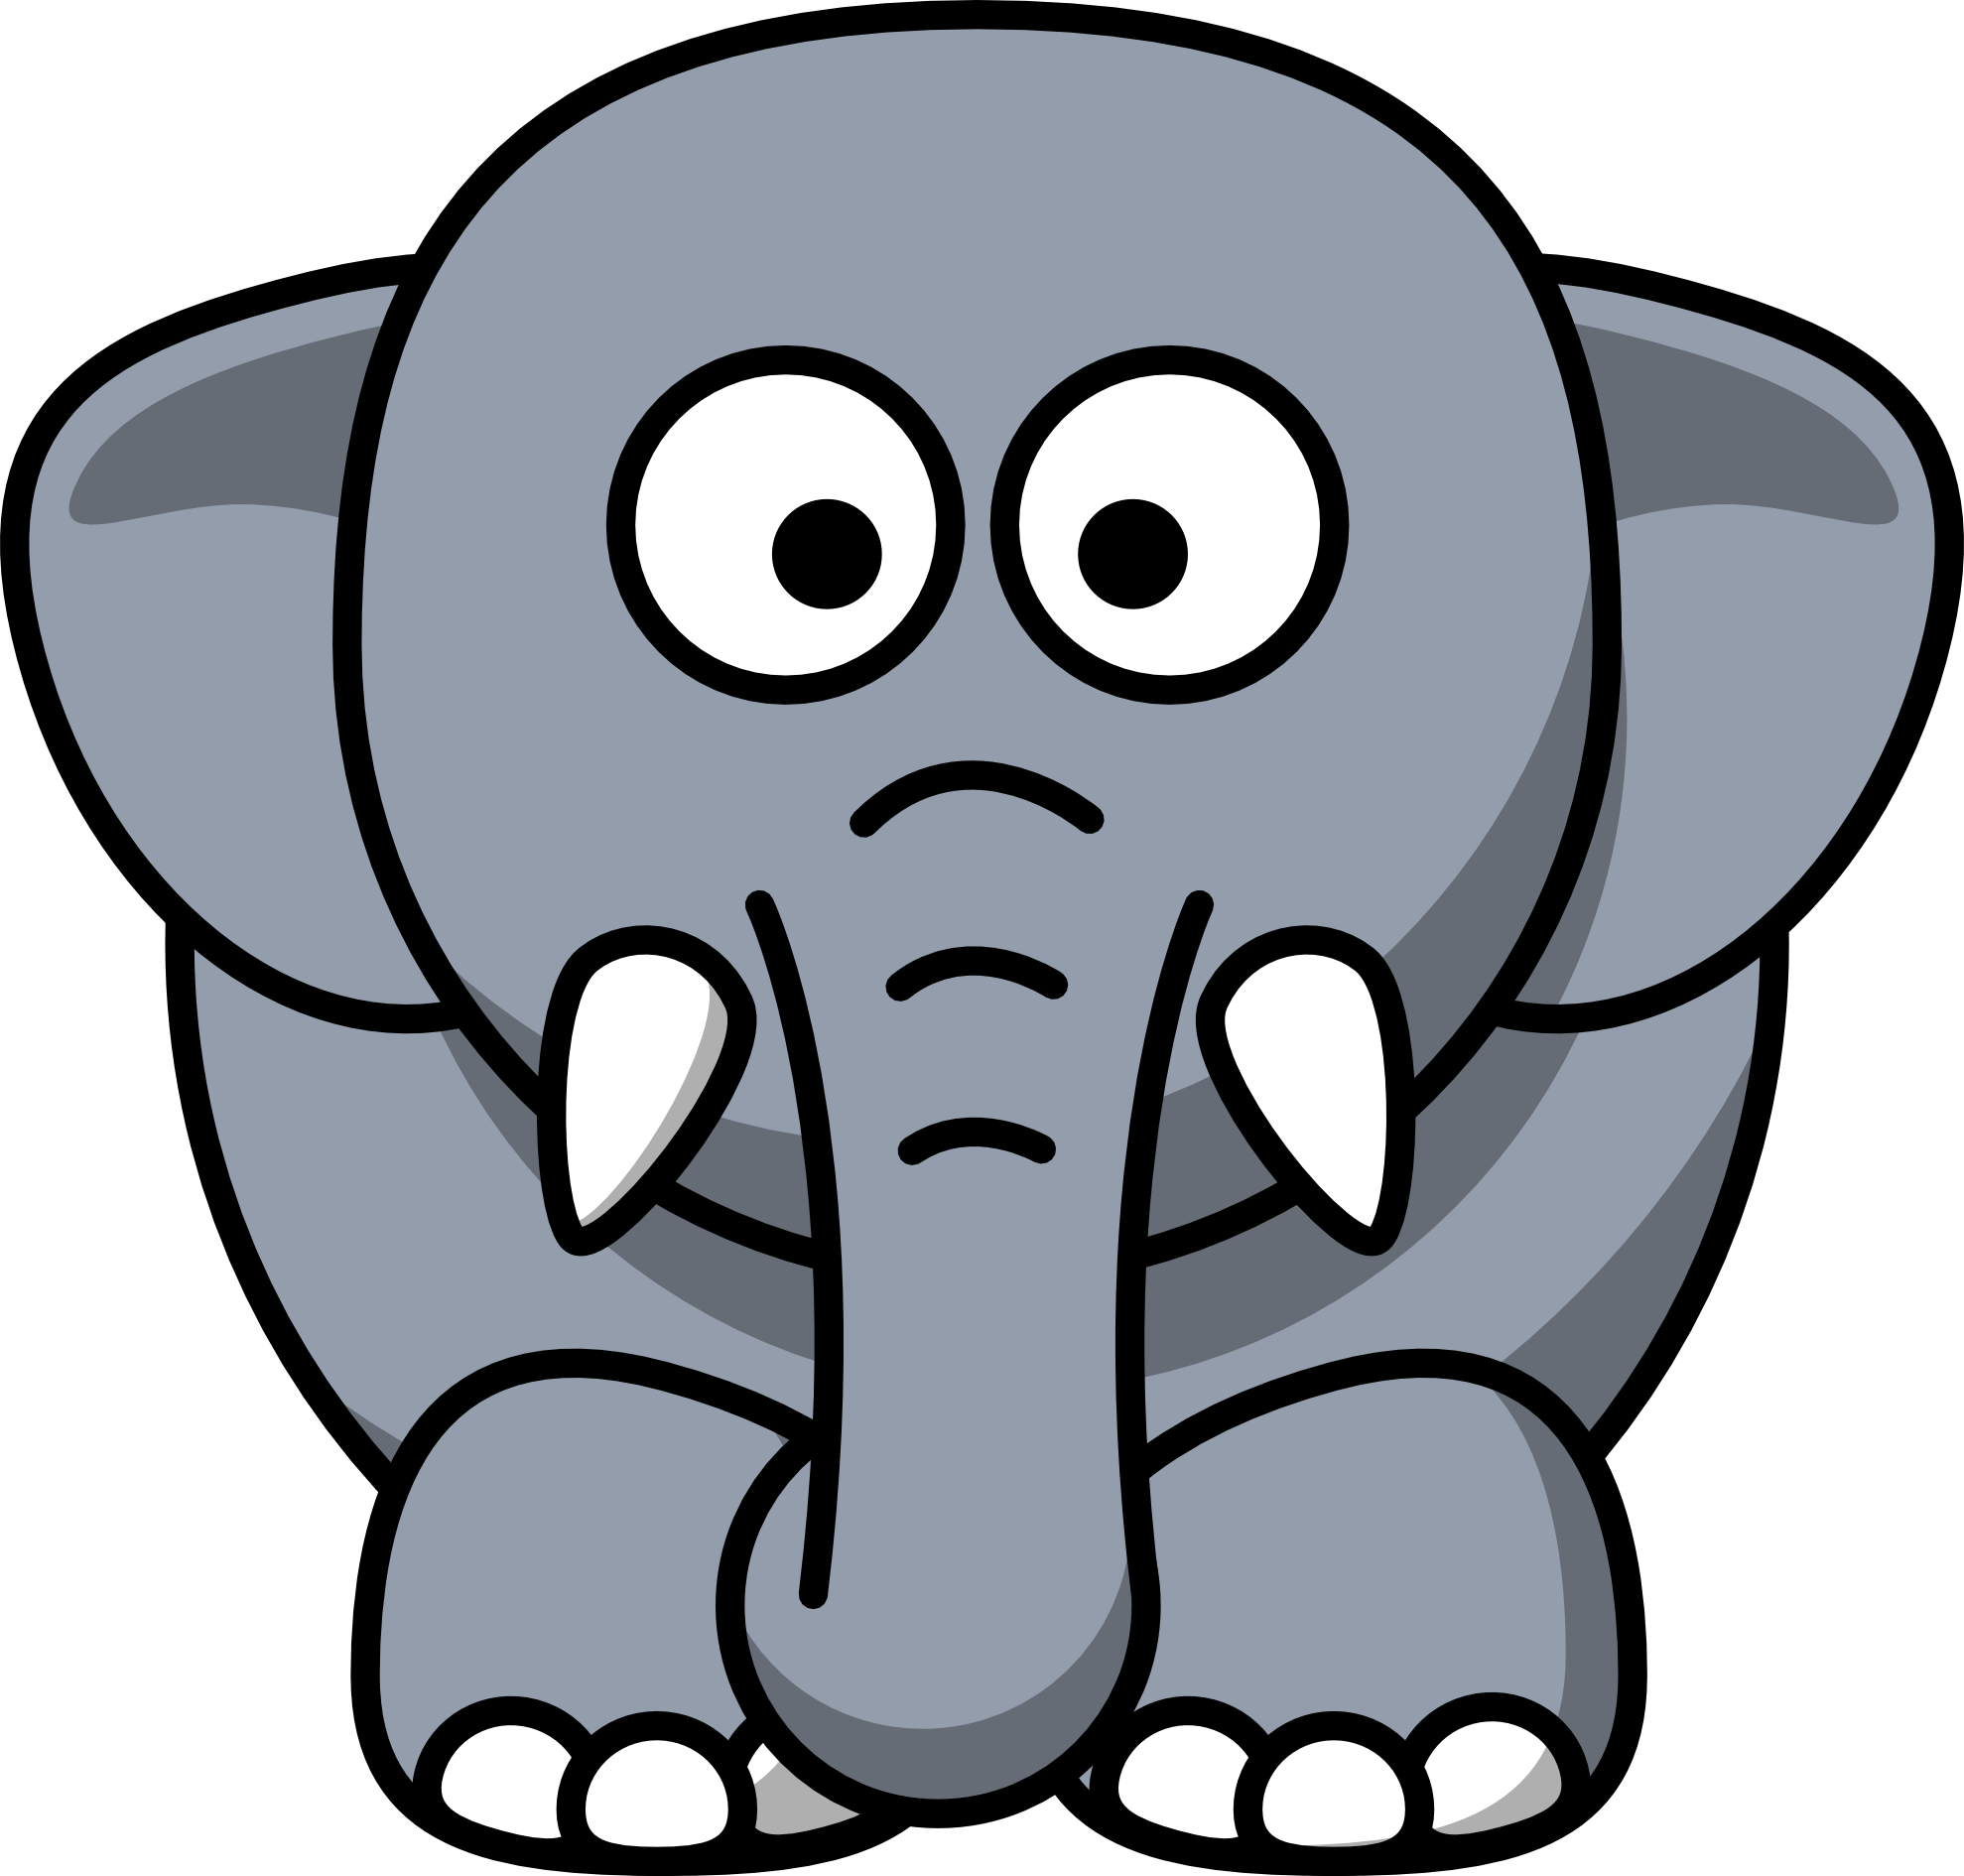 Clip Art Elephant - Clipart library